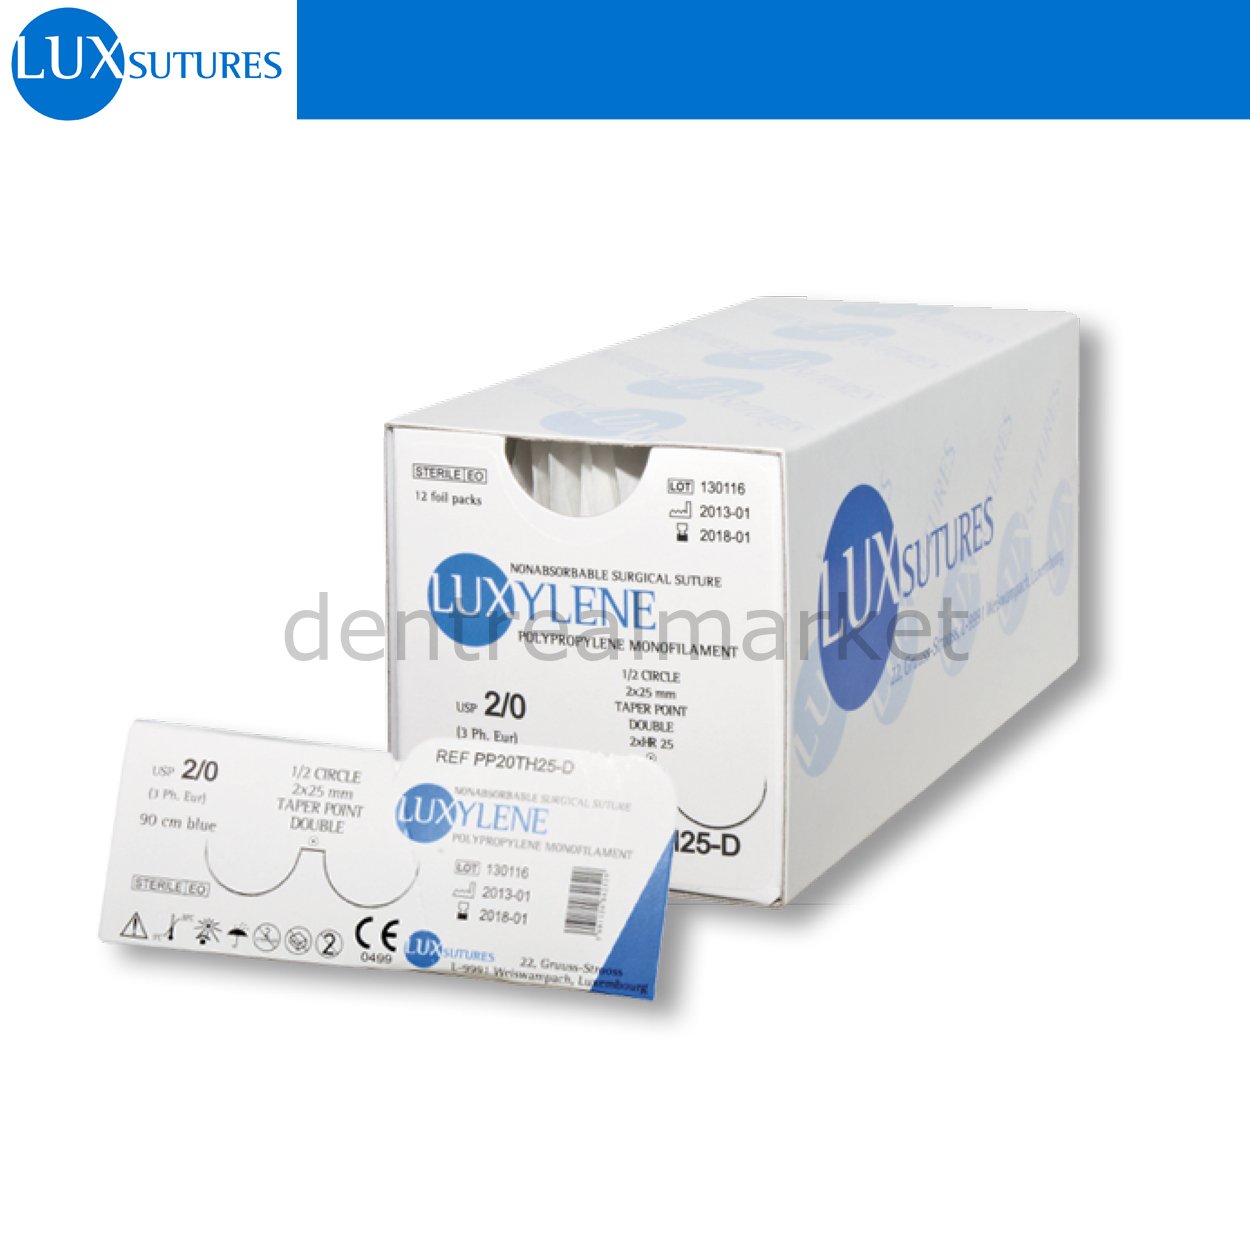 DentrealStore - LuxSutures Luxylene Polypropylene Surgical Suture - Reverse Cutting Needle - 2 Box